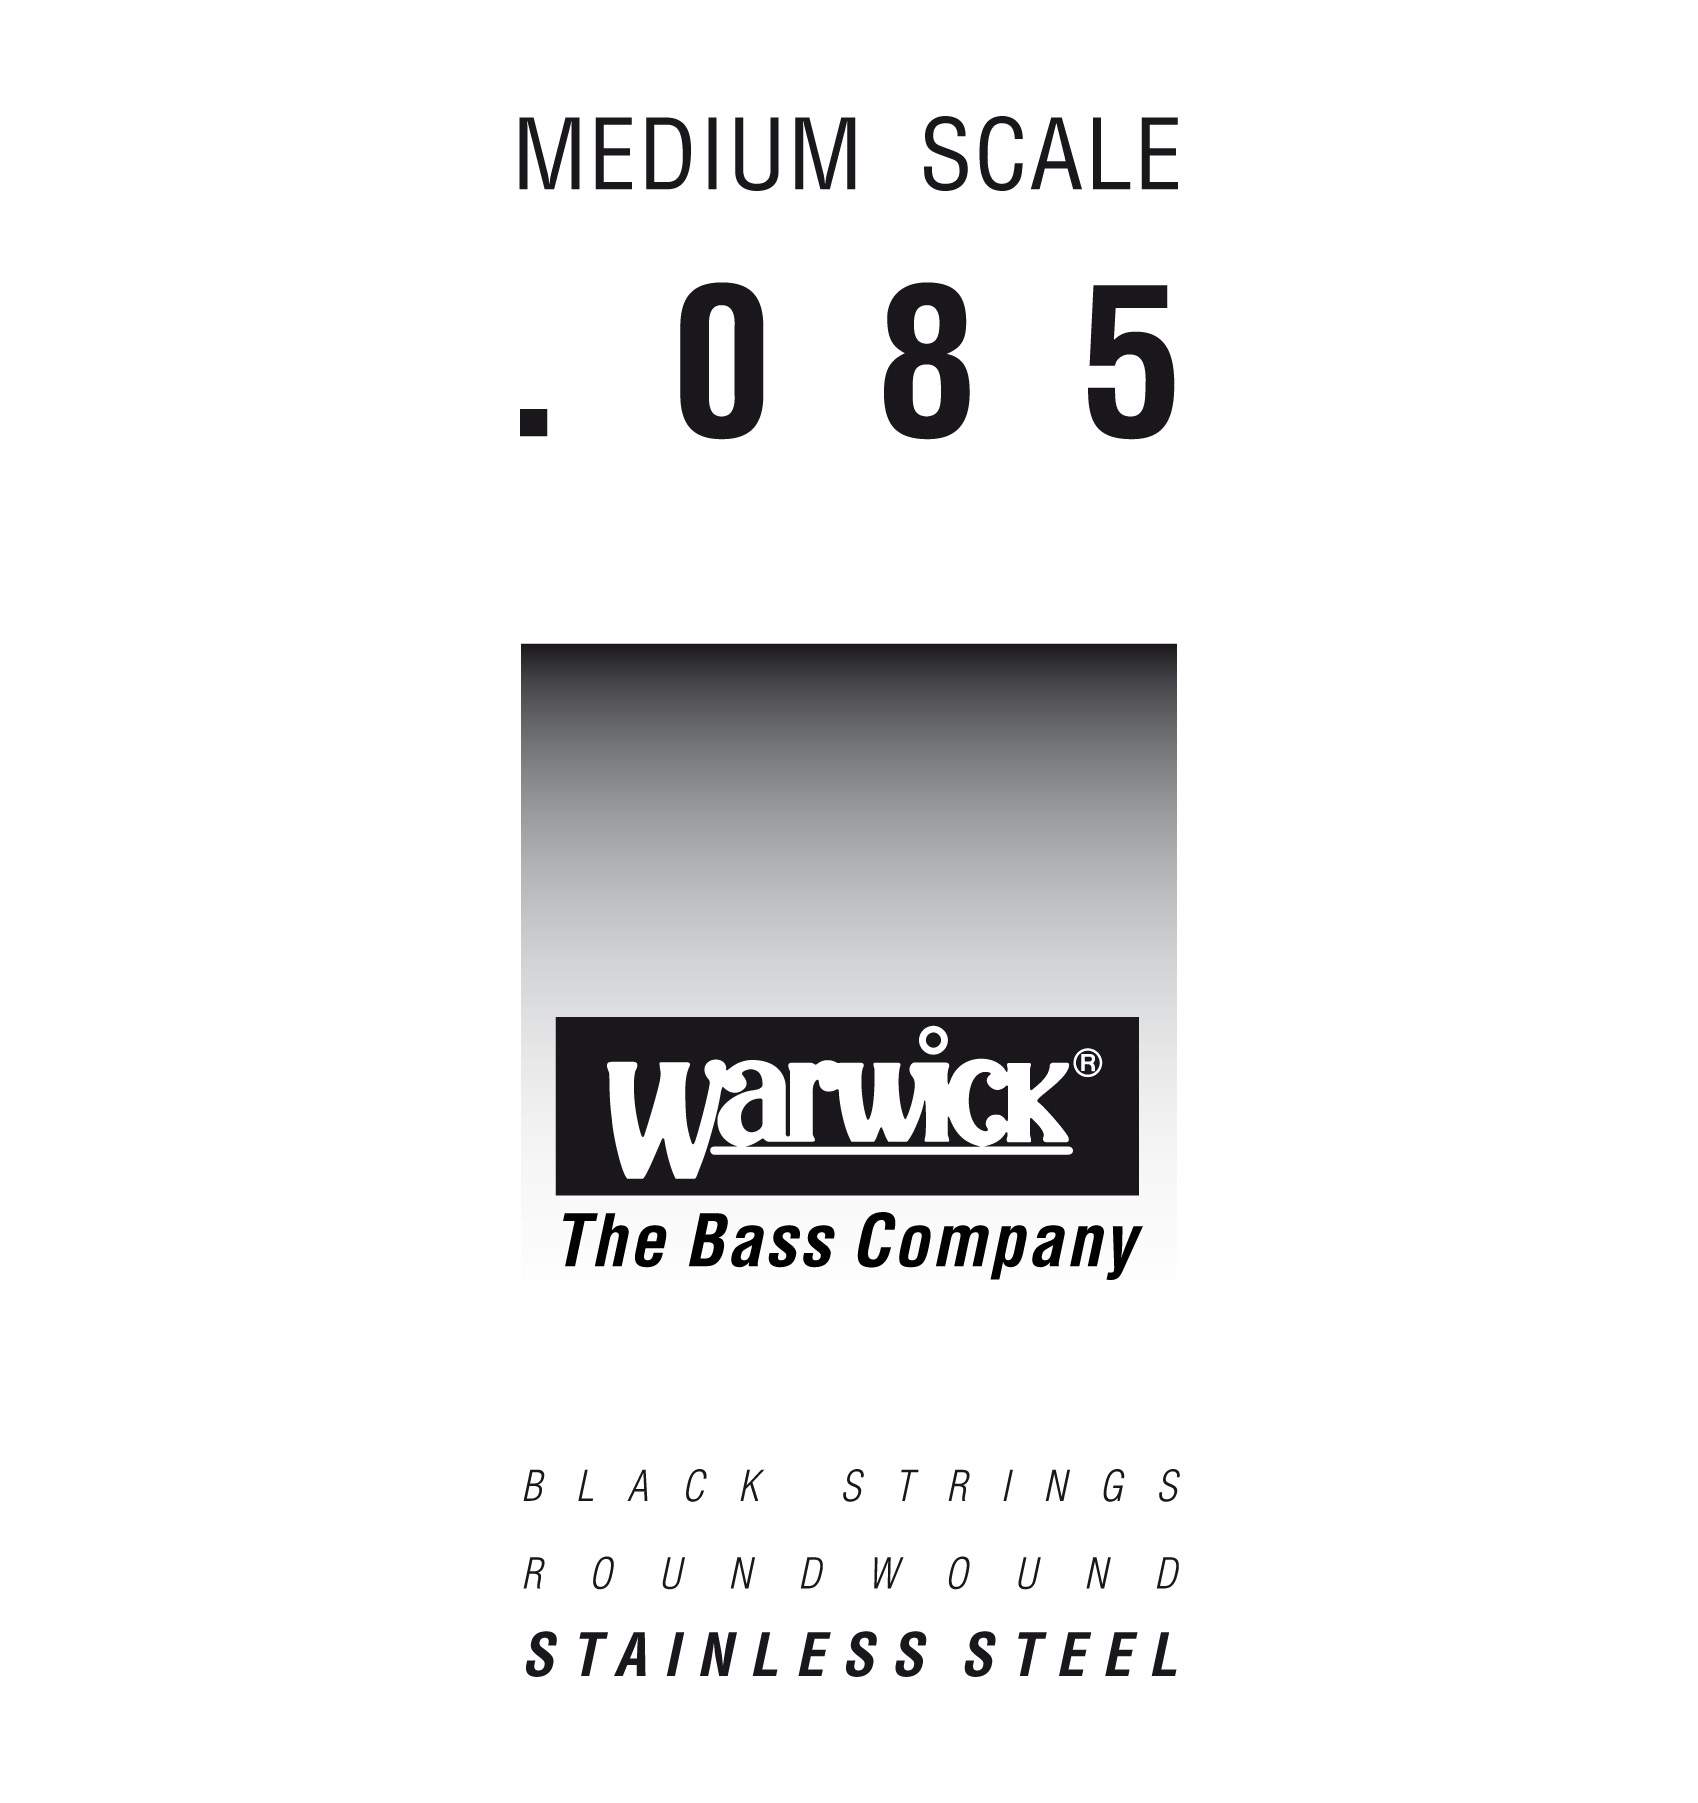 Warwick Black Label Bass Strings, Stainless Steel - Bass Single String, .085", Medium Scale